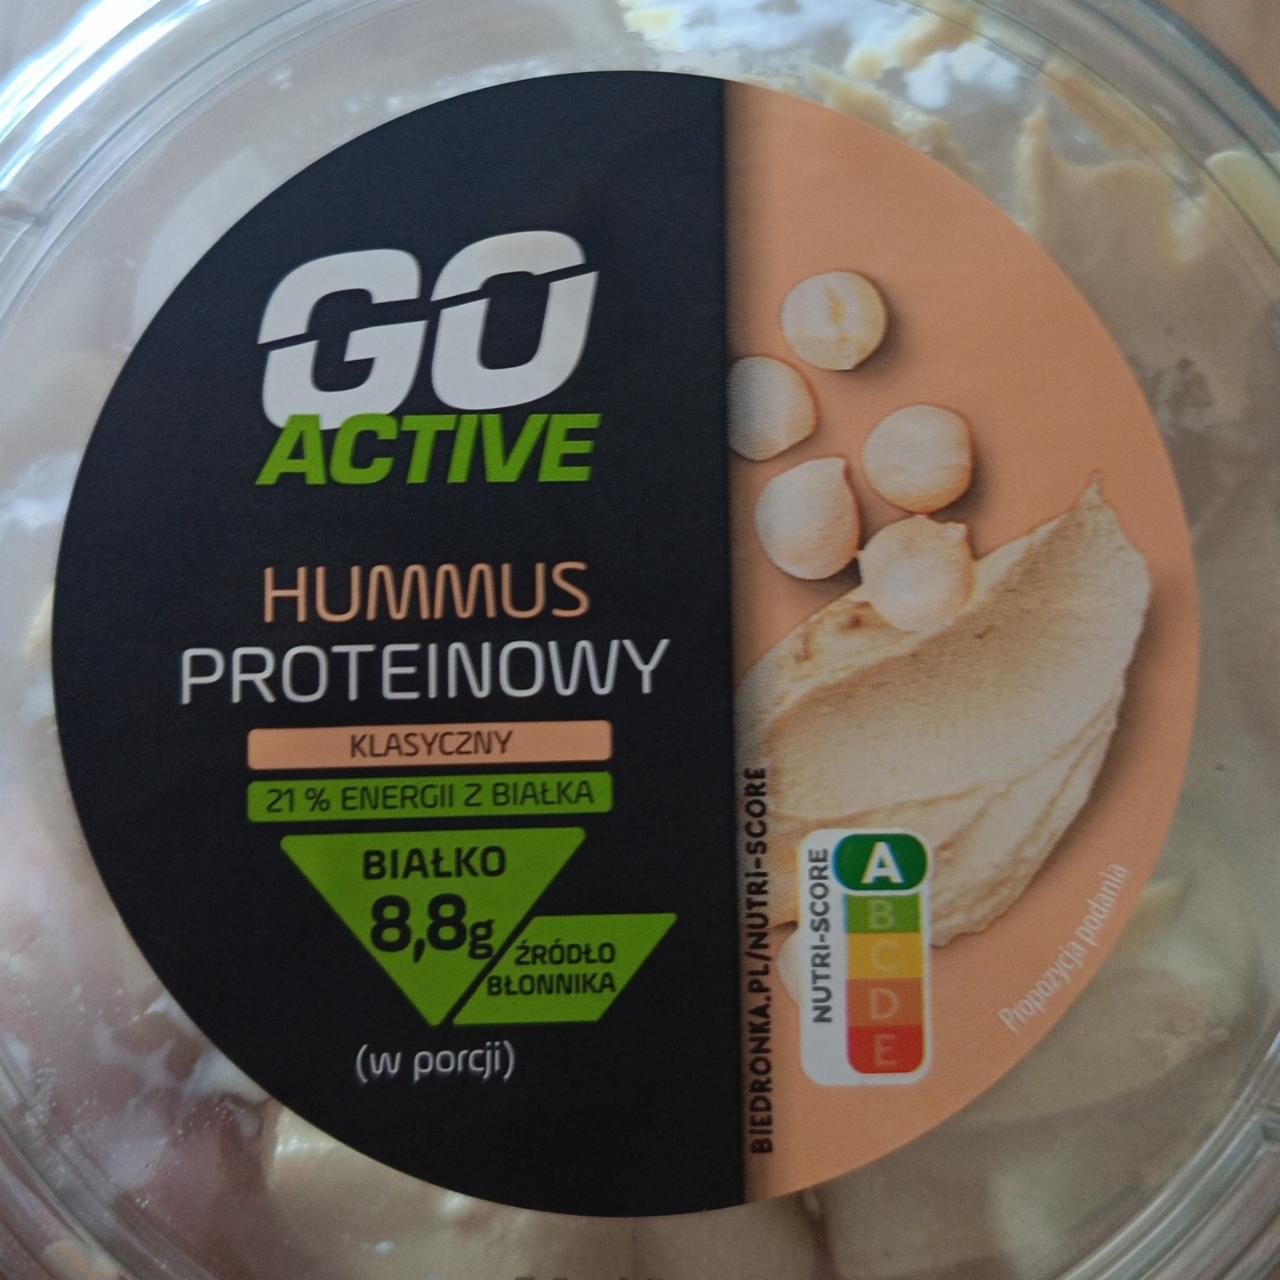 Zdjęcia - Hummus proteinowy klasyczny go active